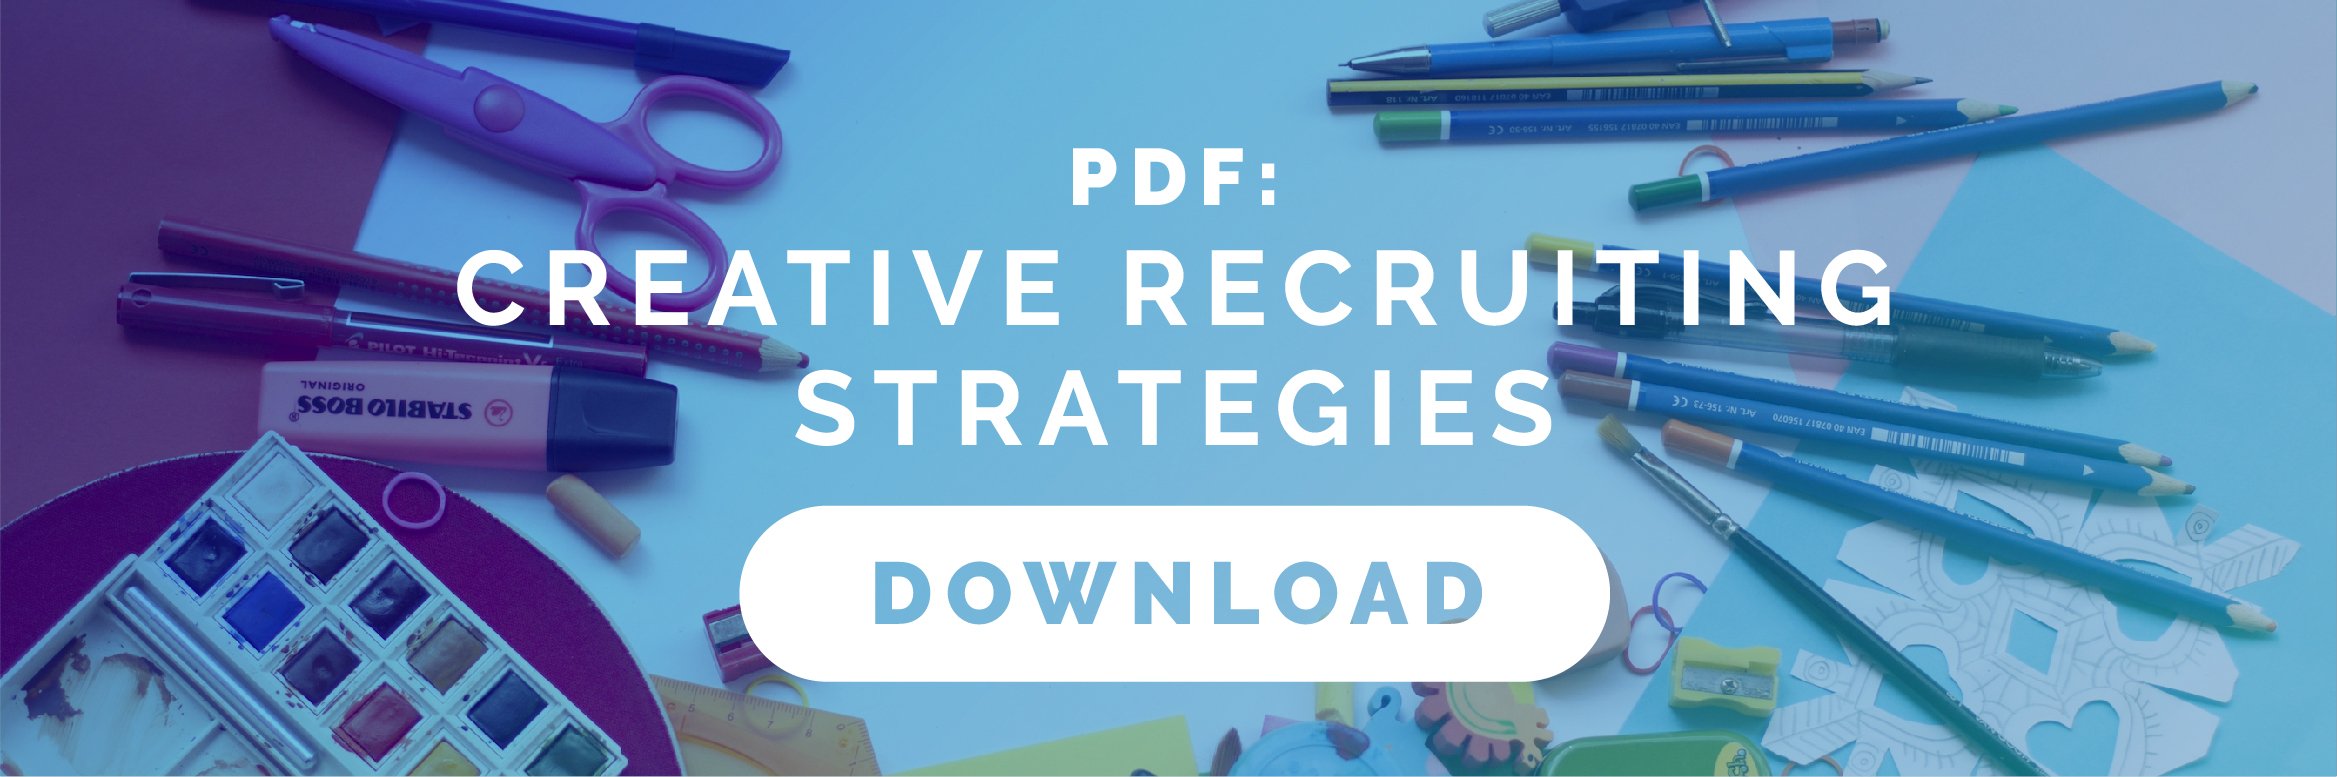 creative recruiting strategies-08